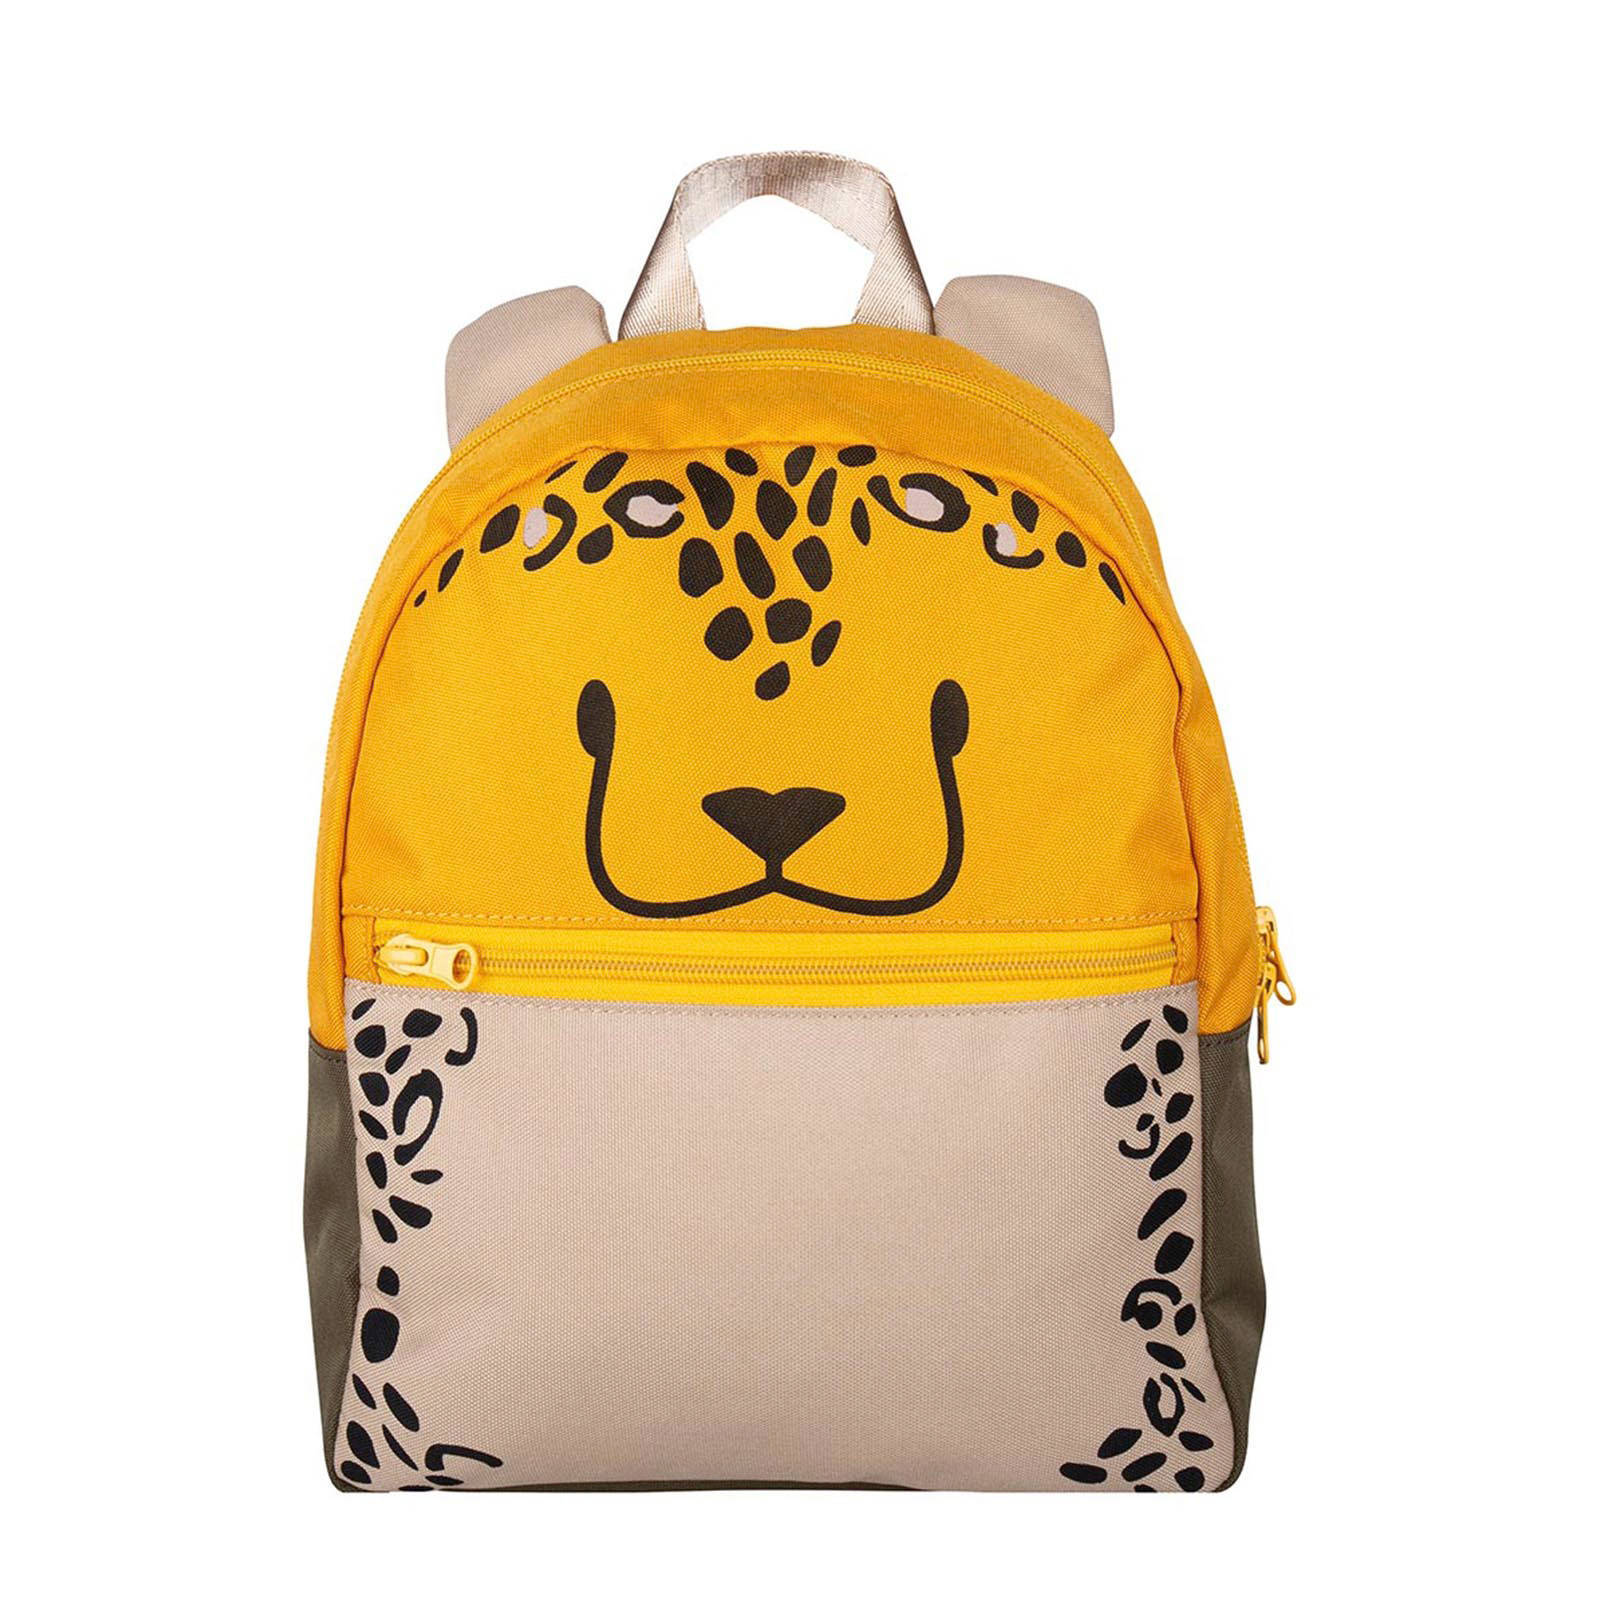 The Little Green Bag rugzak Fauna Leopard geel/bruin online kopen